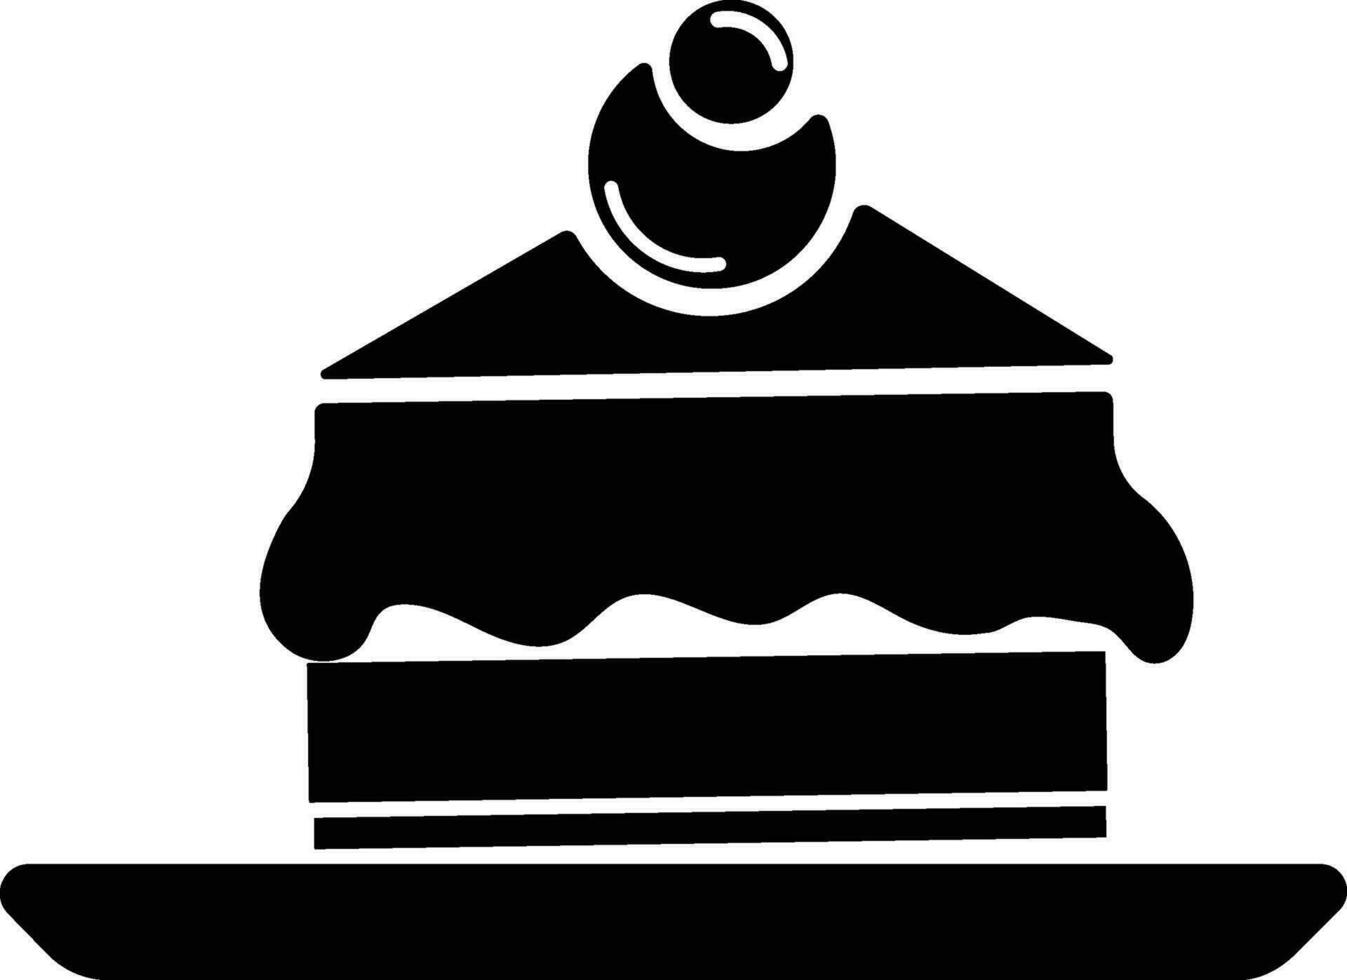 svart illustration av kaka skiva. vektor